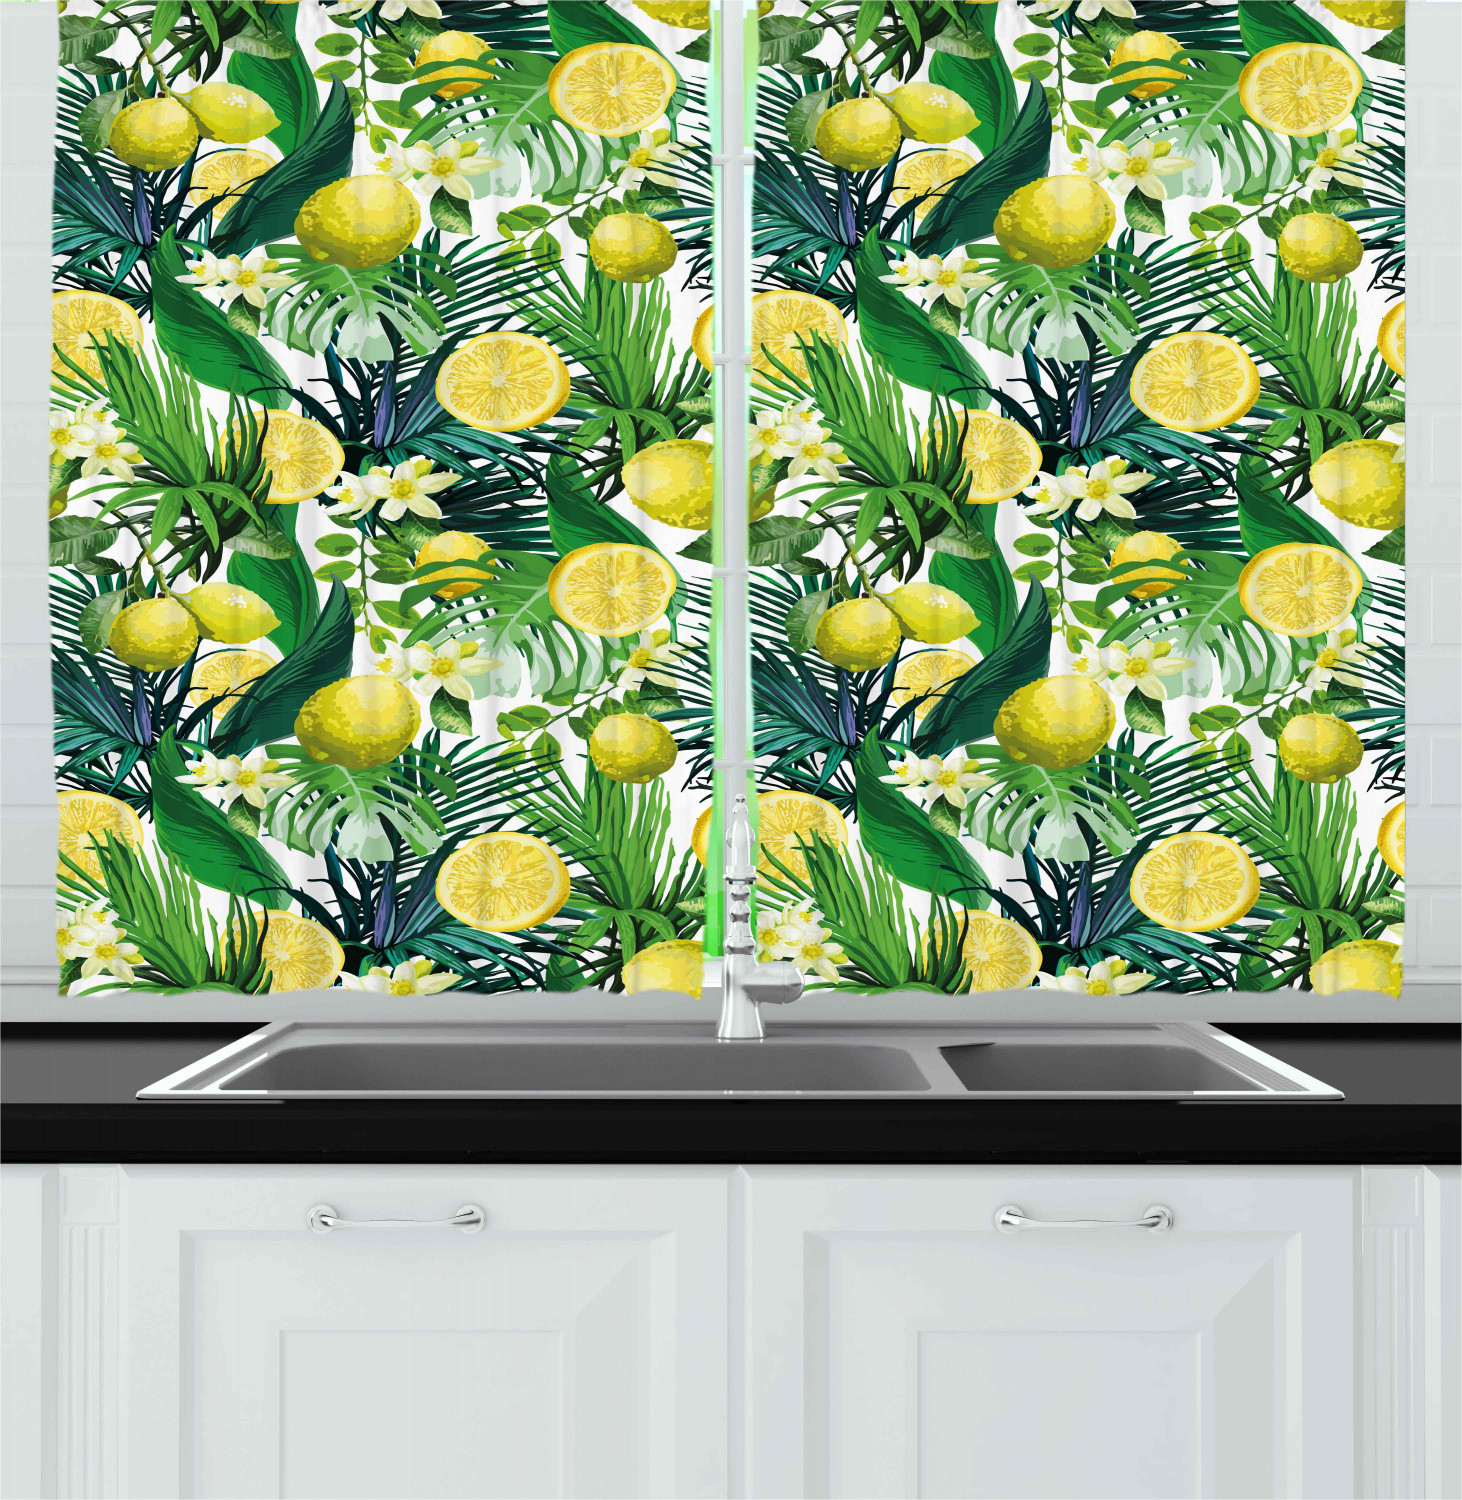 Lemon Kitchen Curtains
 Summer Lemon Kitchen Curtains 2 Panel Set Window Drapes 55